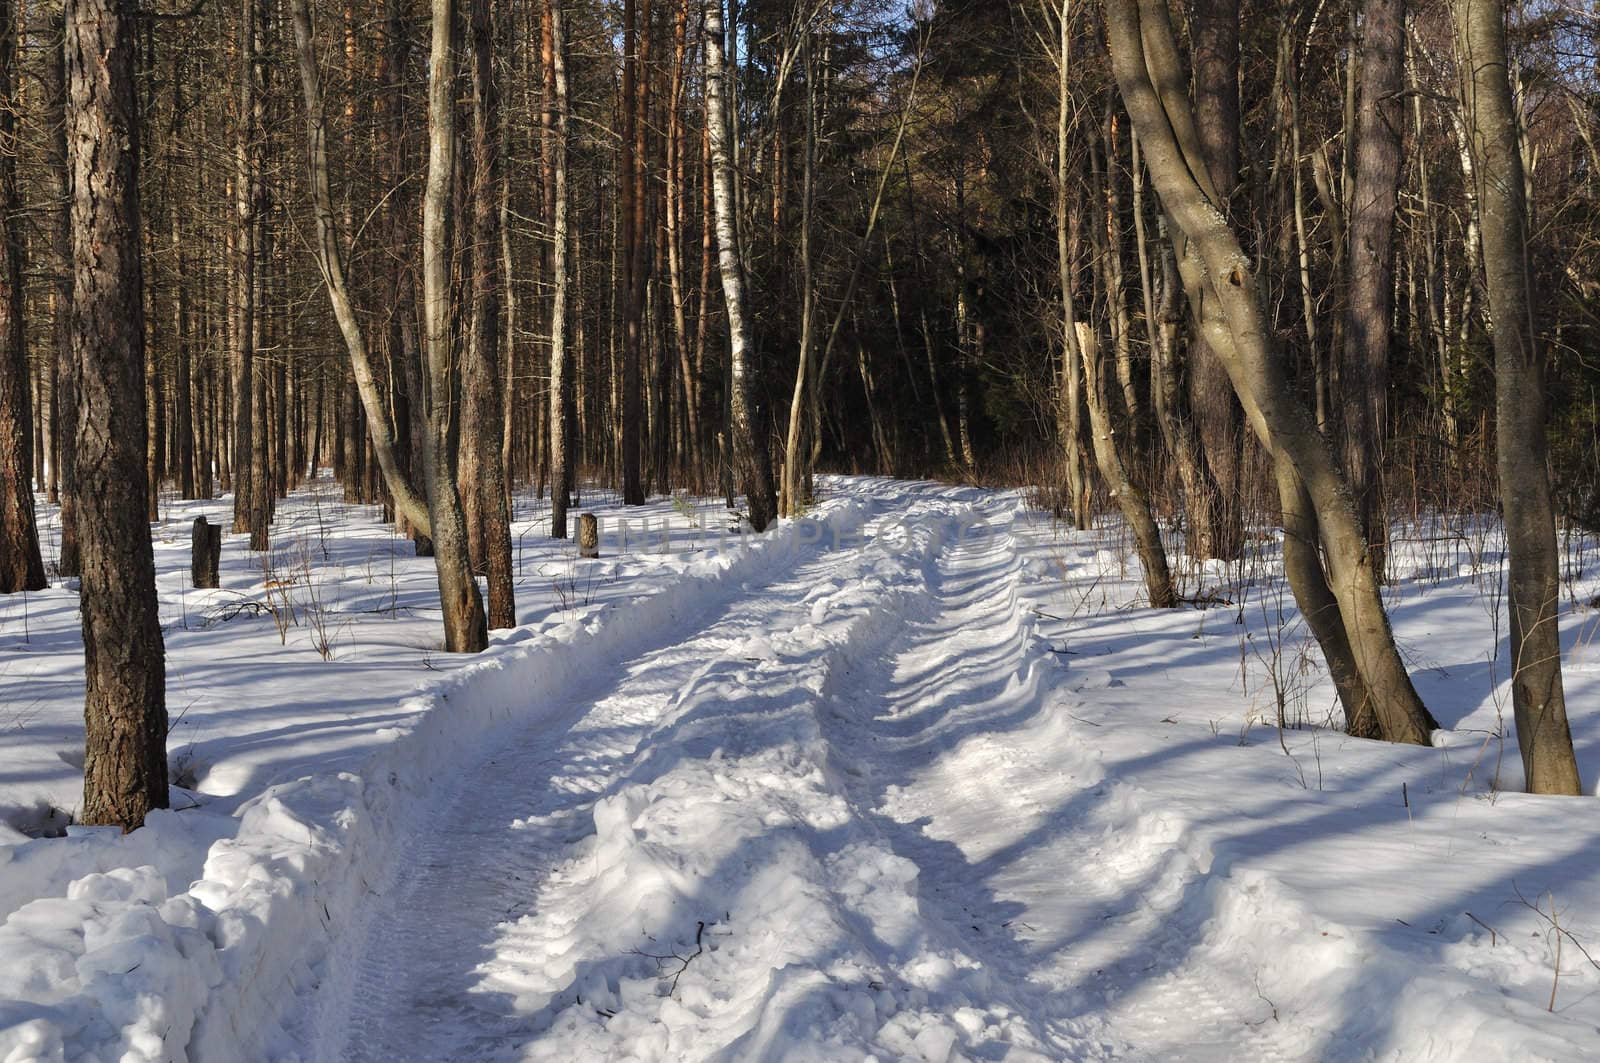 Snowy road in winter forest by wander